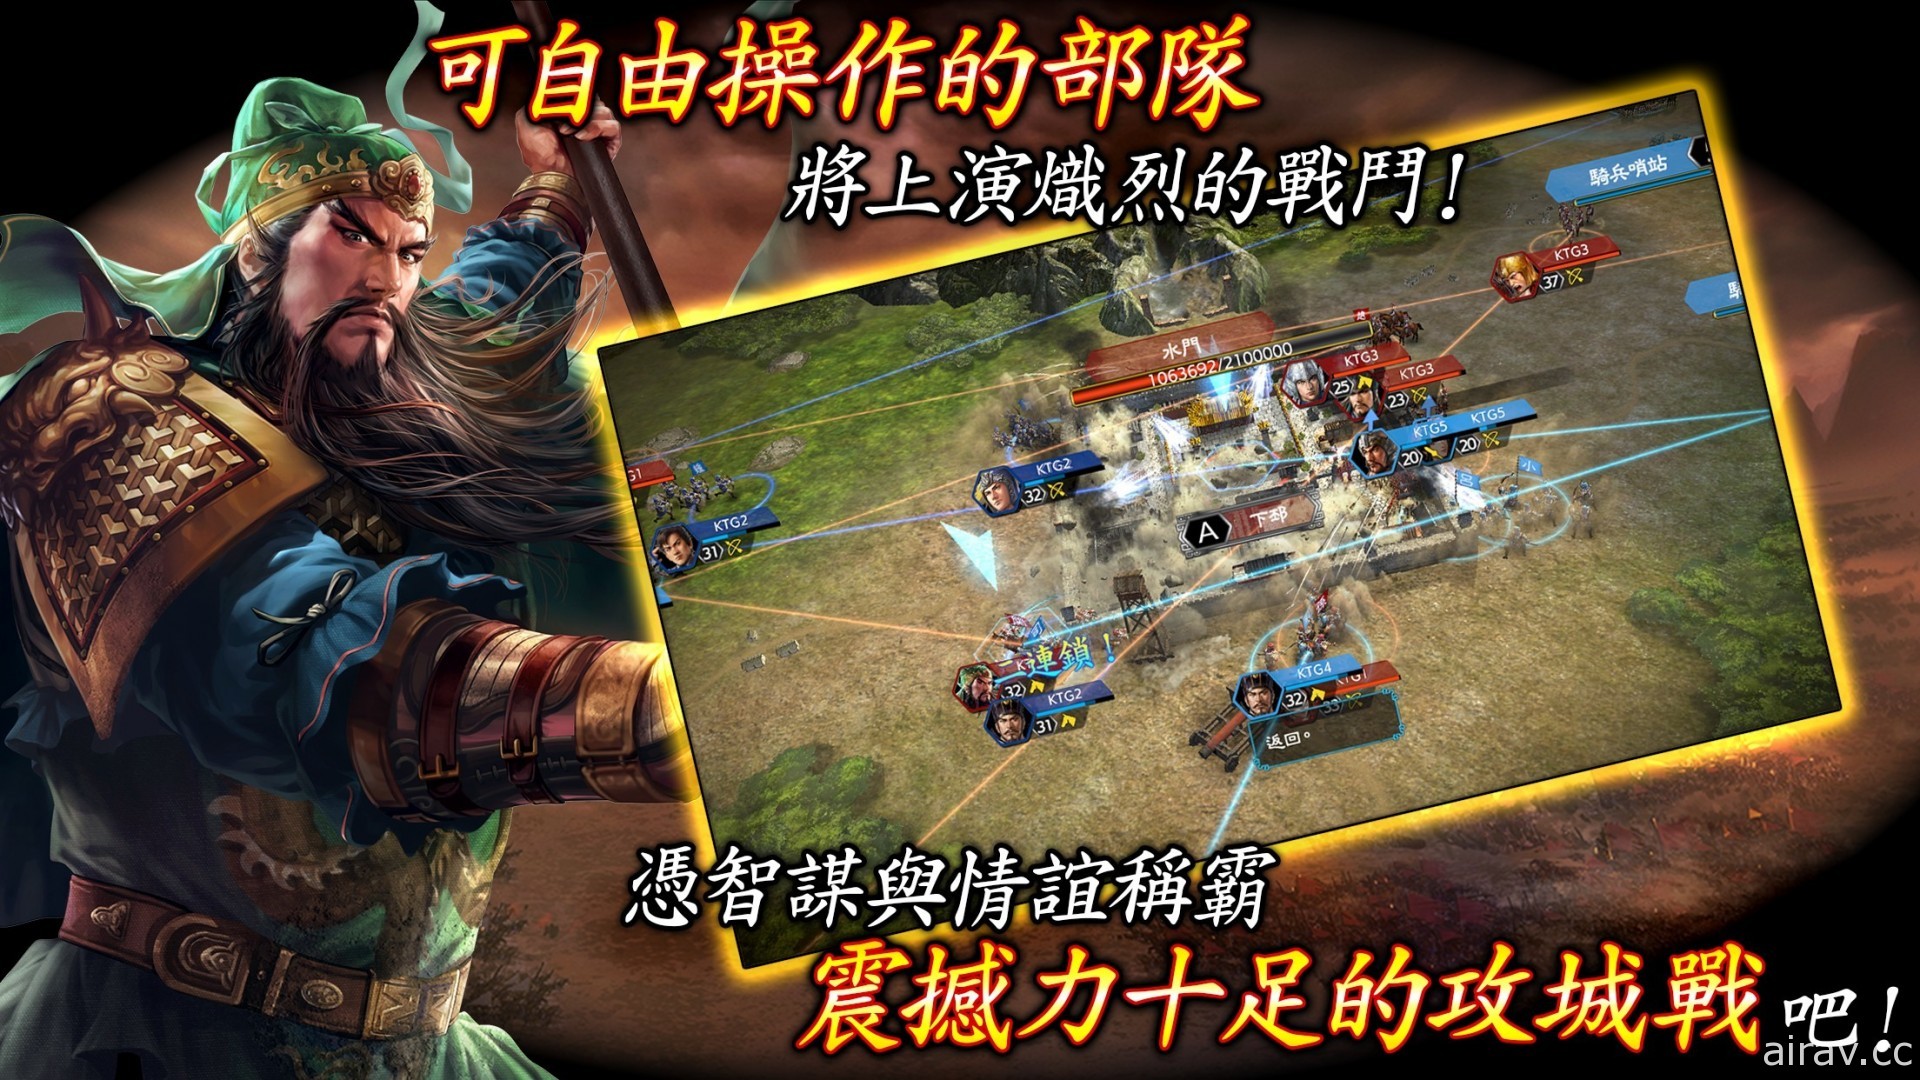 MMO 戰略模擬遊戲《三國志 霸道》確認將推出繁體中文版 現已開放事前登錄